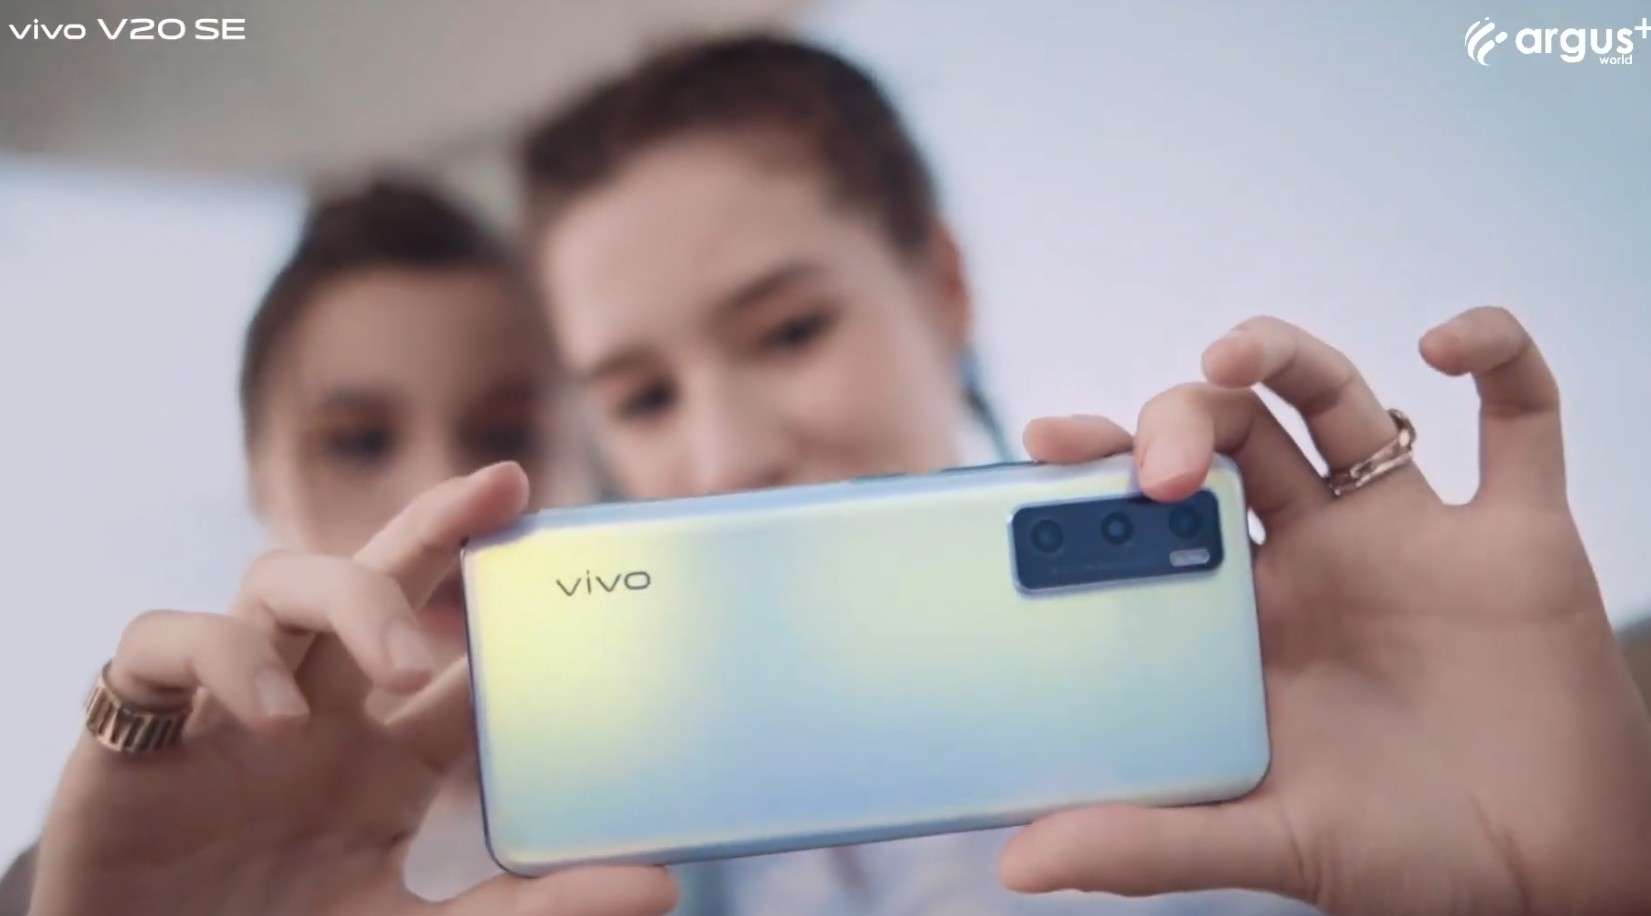 VIVO V20 SE Official Video